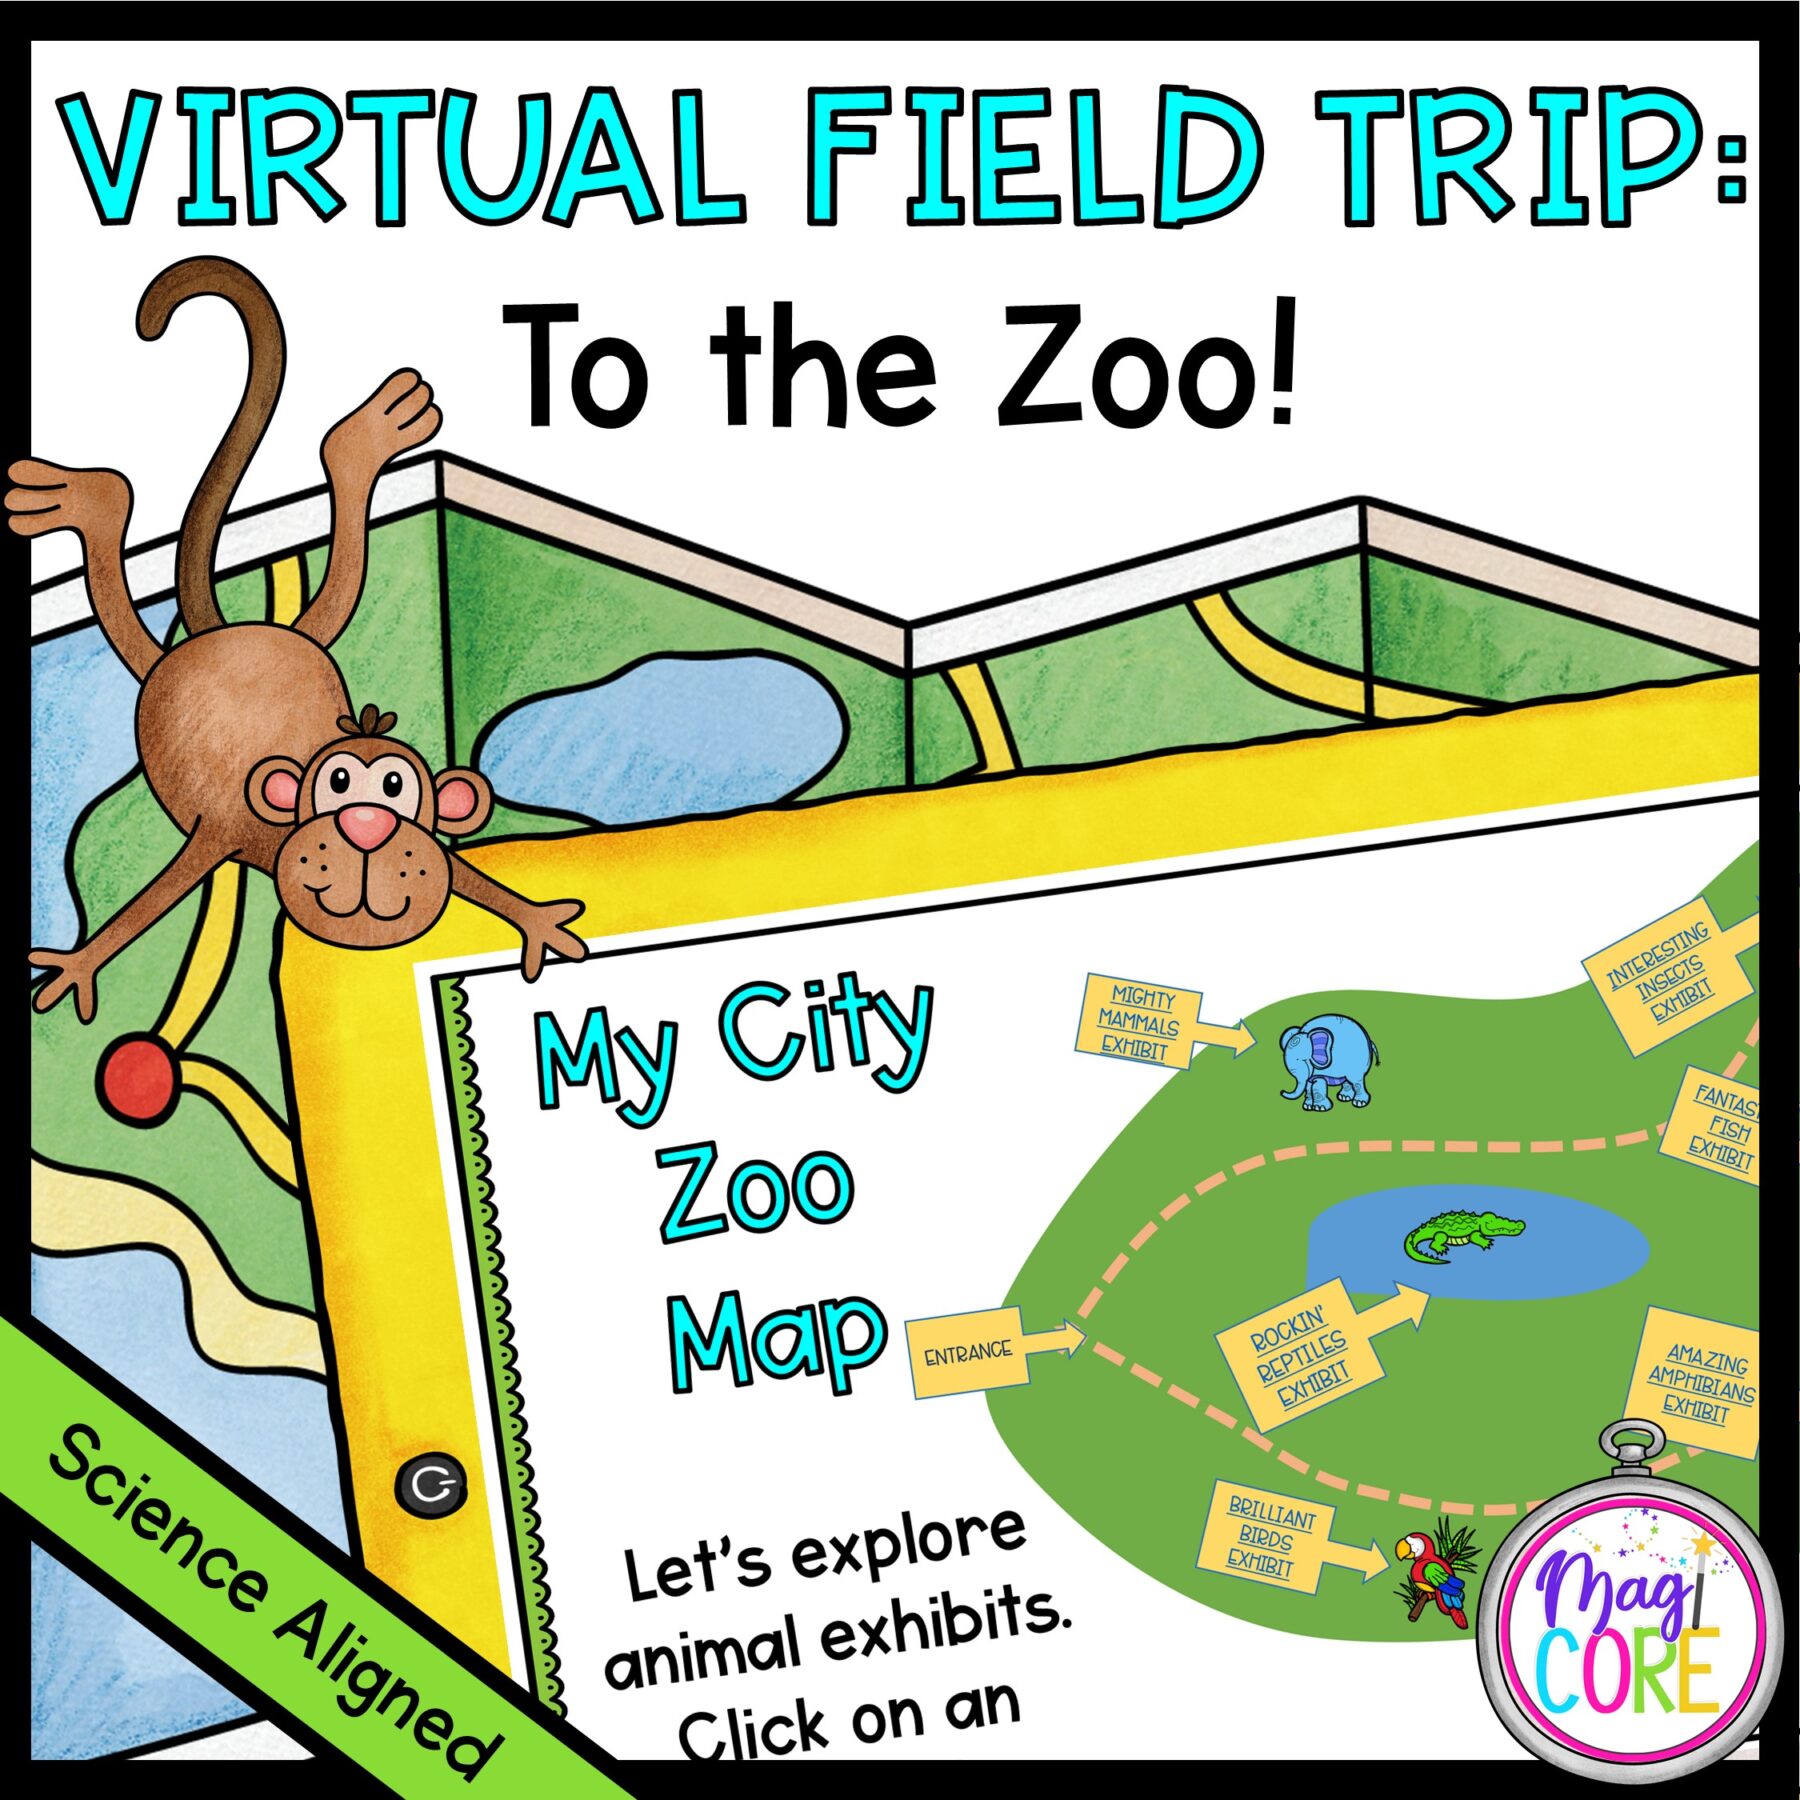 virtual zoo tour for kindergarten